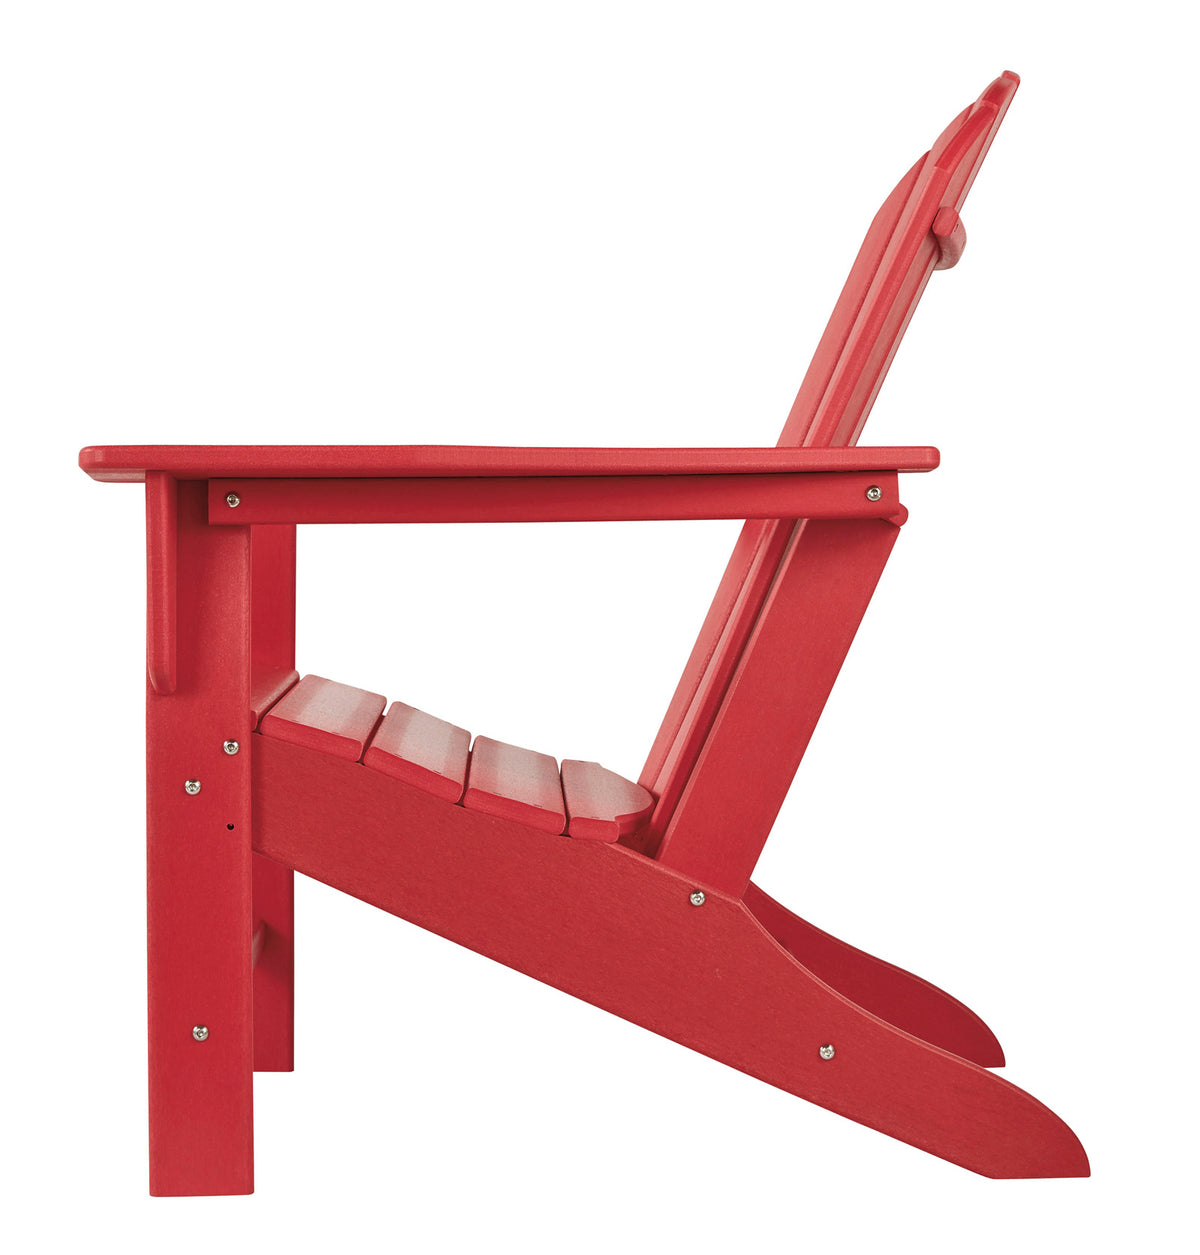 Sundown Treasure Red Adirondack Chair - MJM Furniture